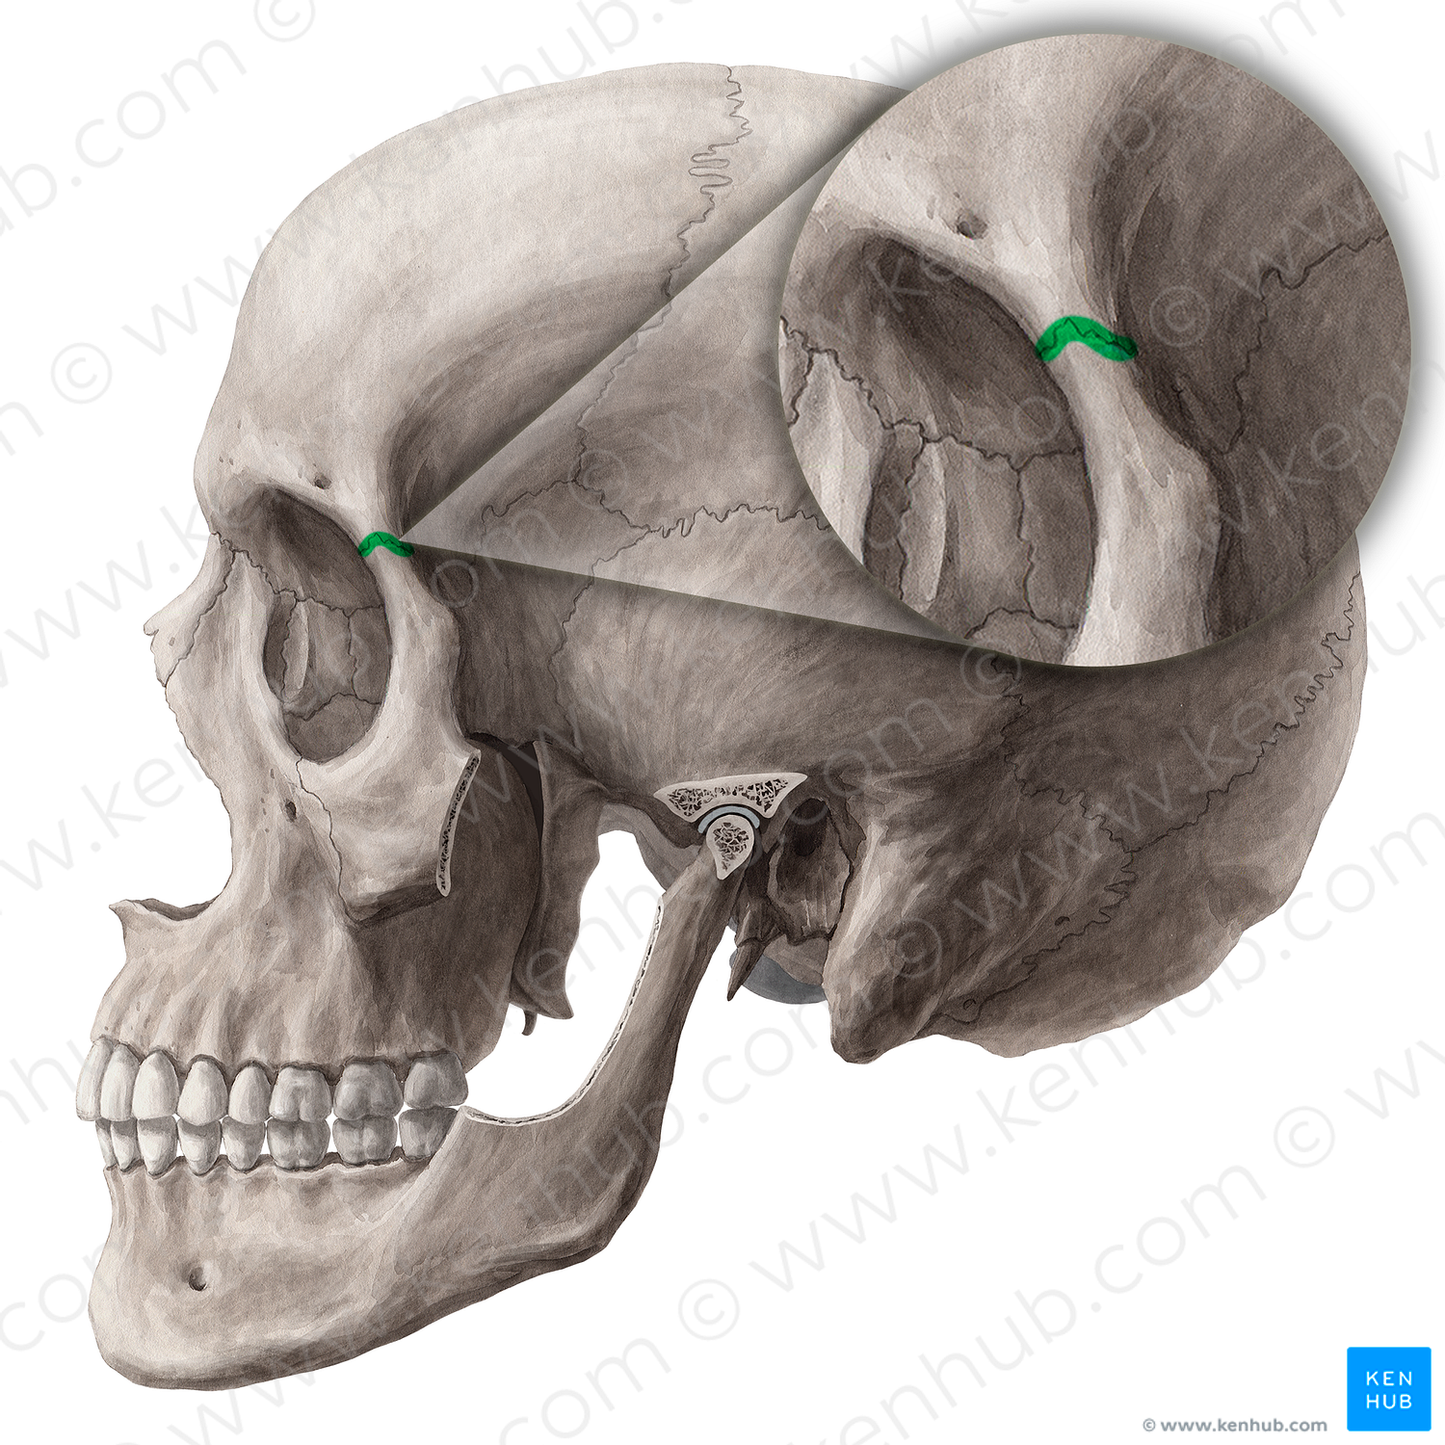 Frontozygomatic suture (#21453)